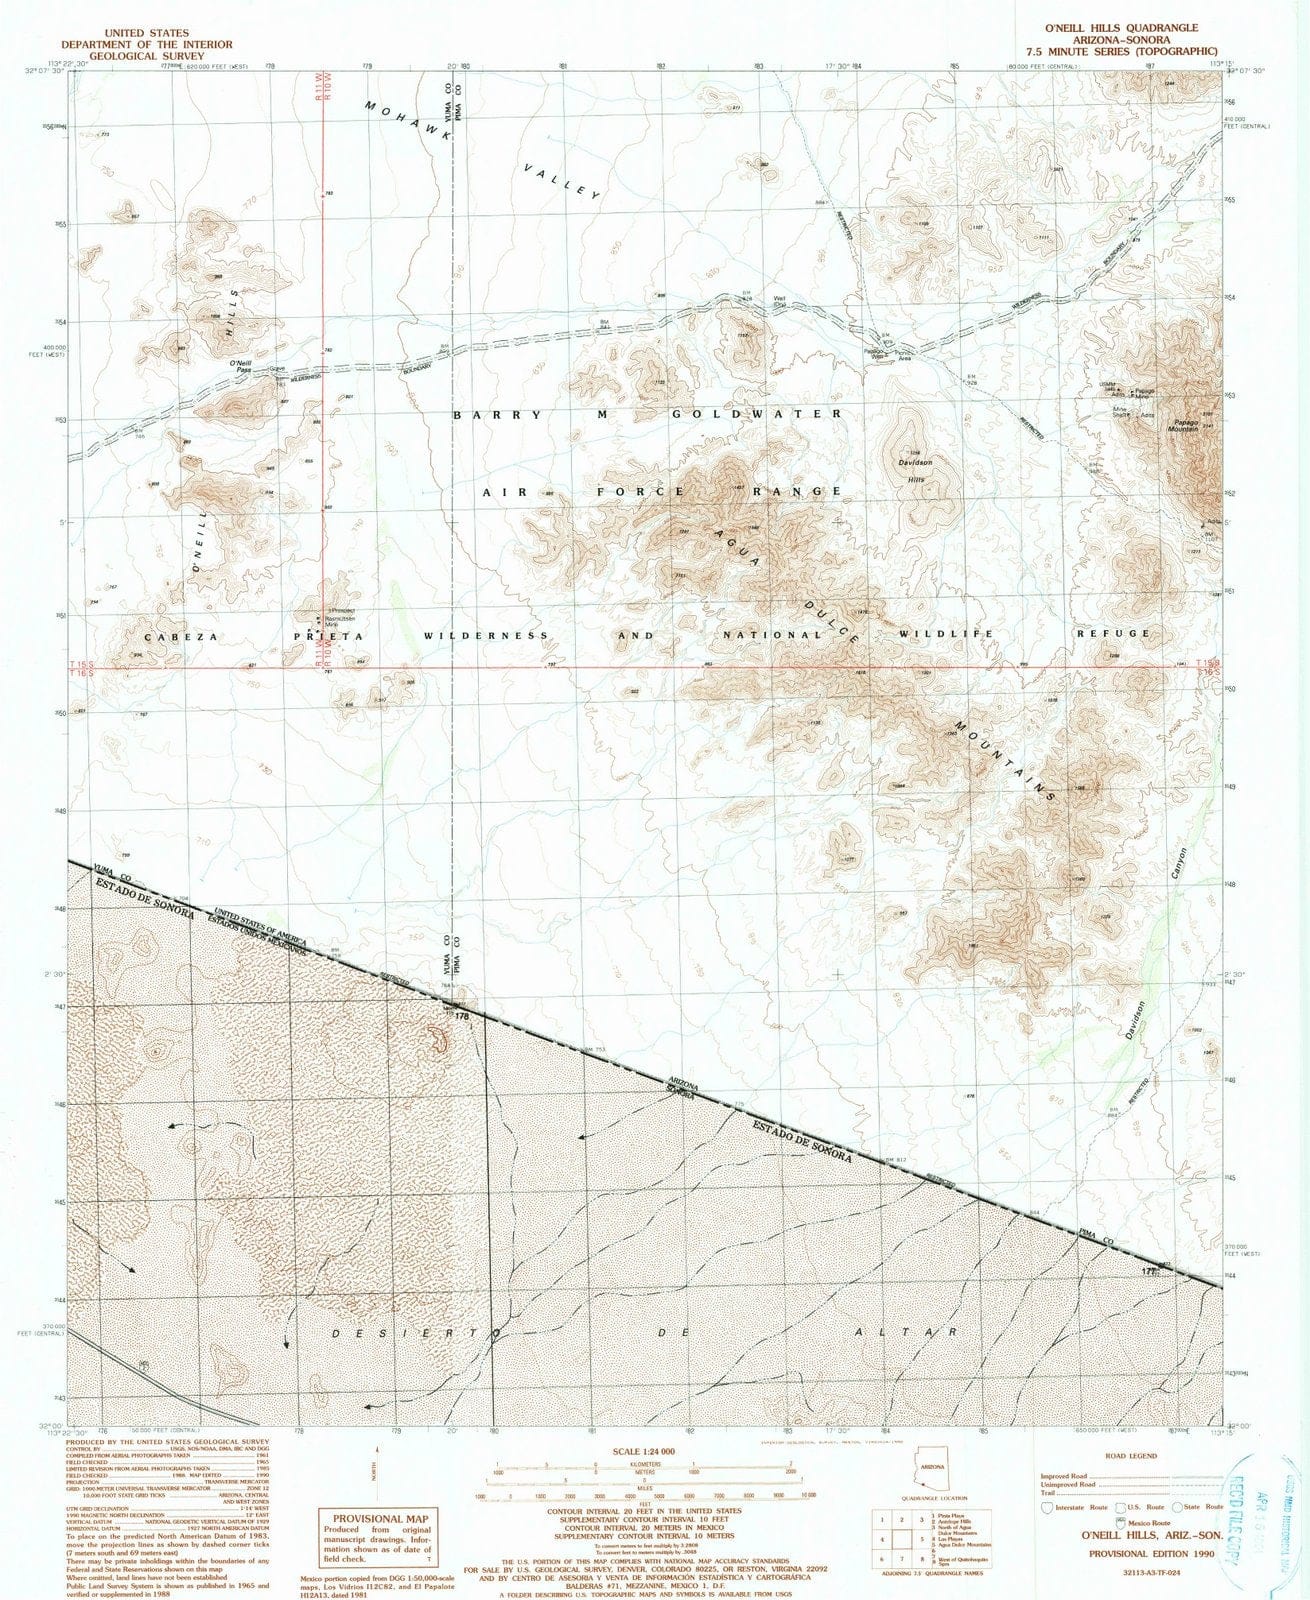 1990 O'Neill Hills, AZ - Arizona - USGS Topographic Map